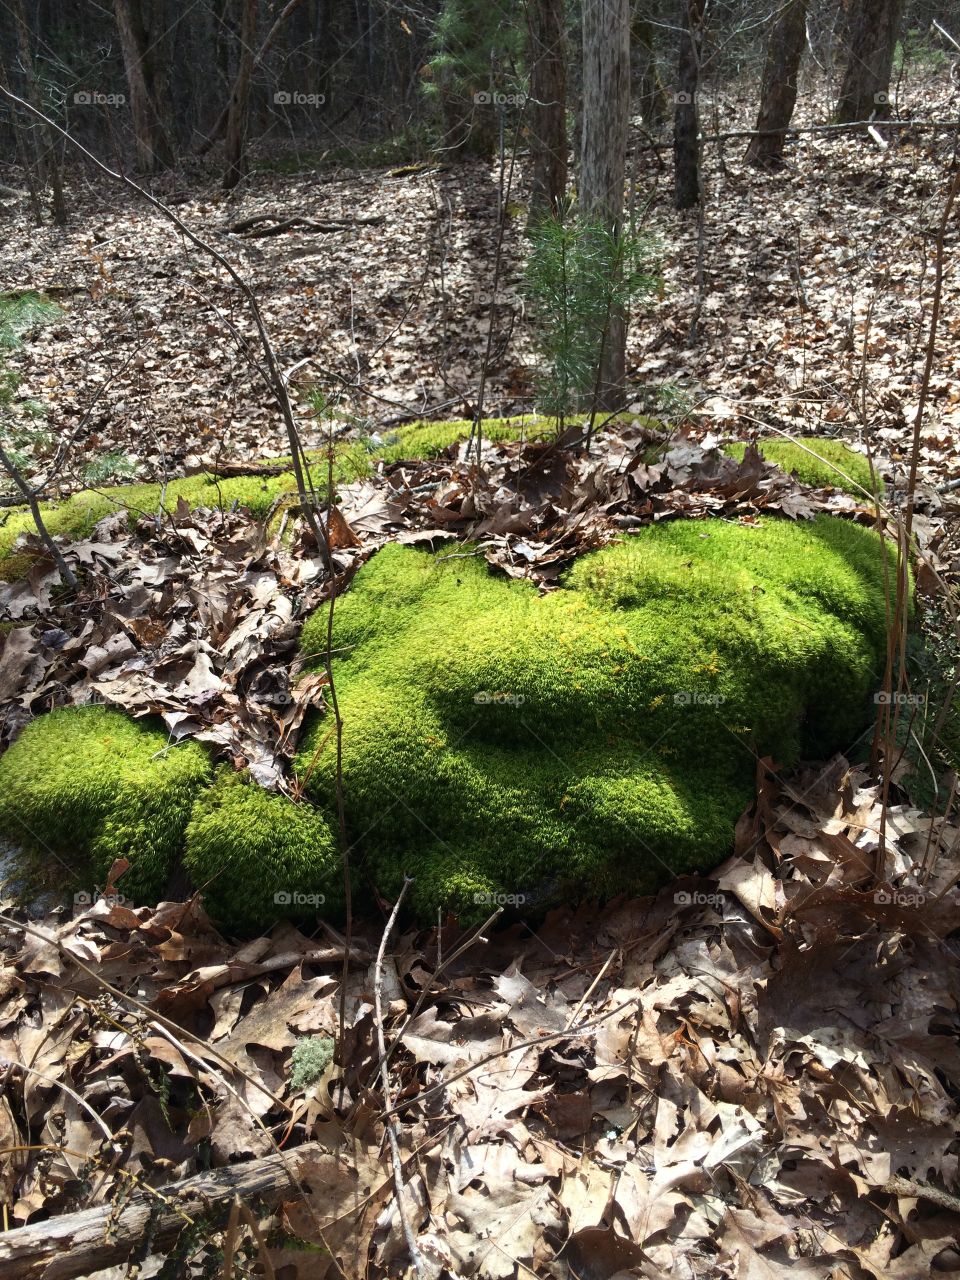 Mossy rocks. Rock moss, moss, green, forest floor 